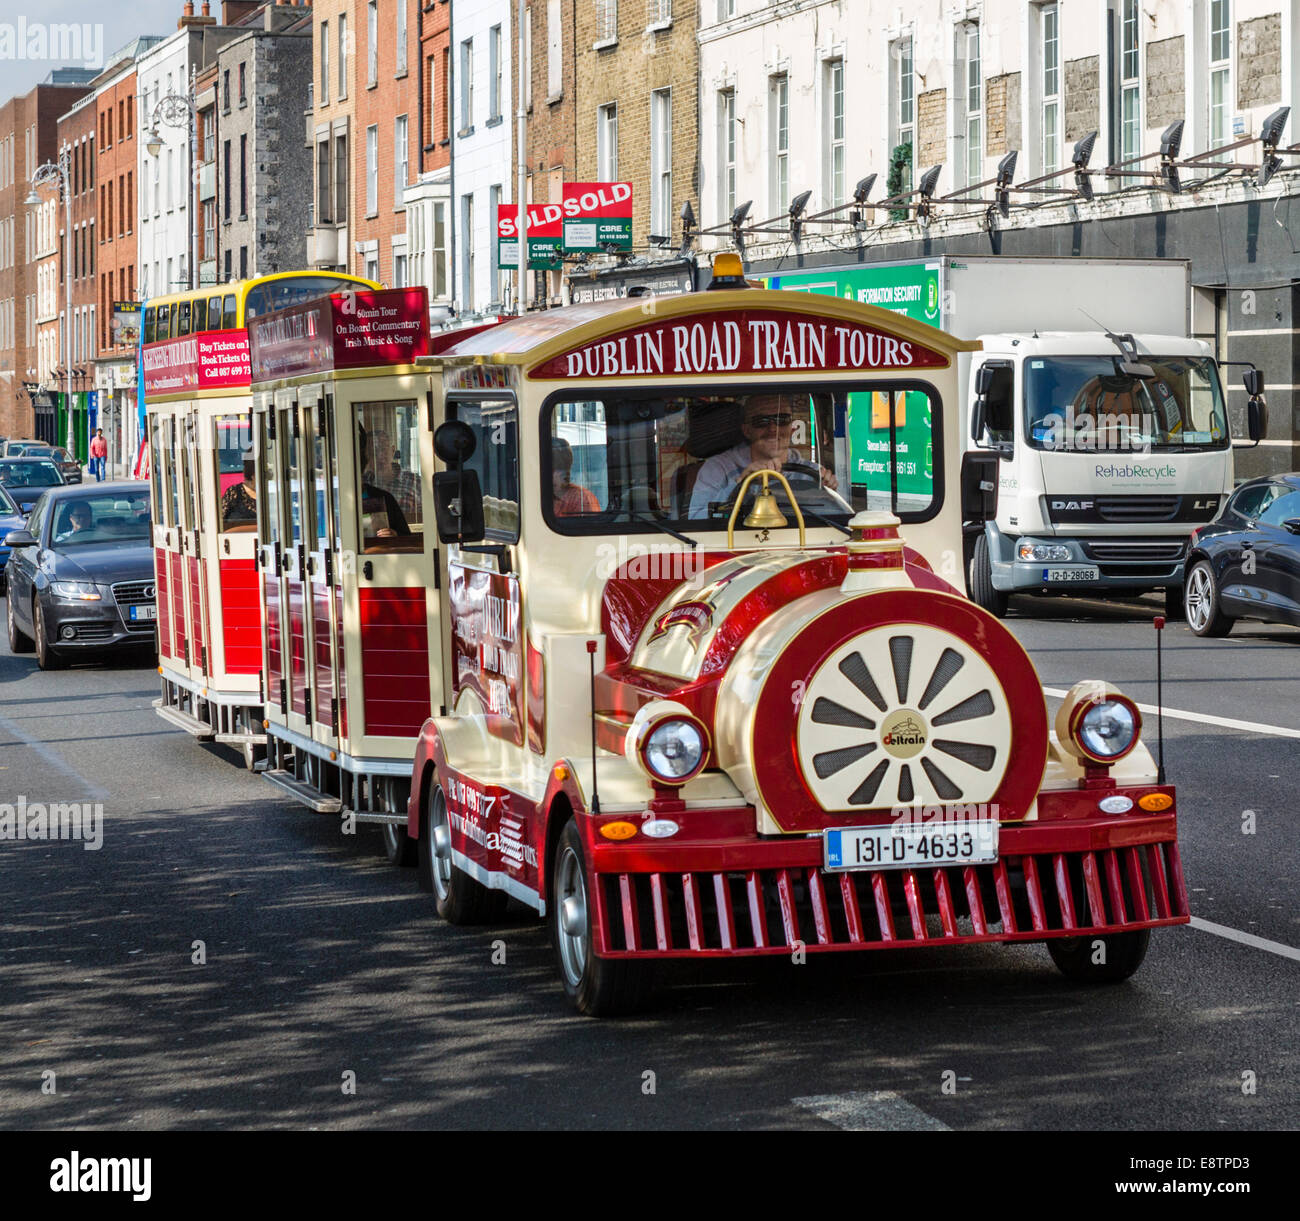 Dublin Road Train Tours on Ormond Quay, Dublin City, Republic of Ireland Stock Photo